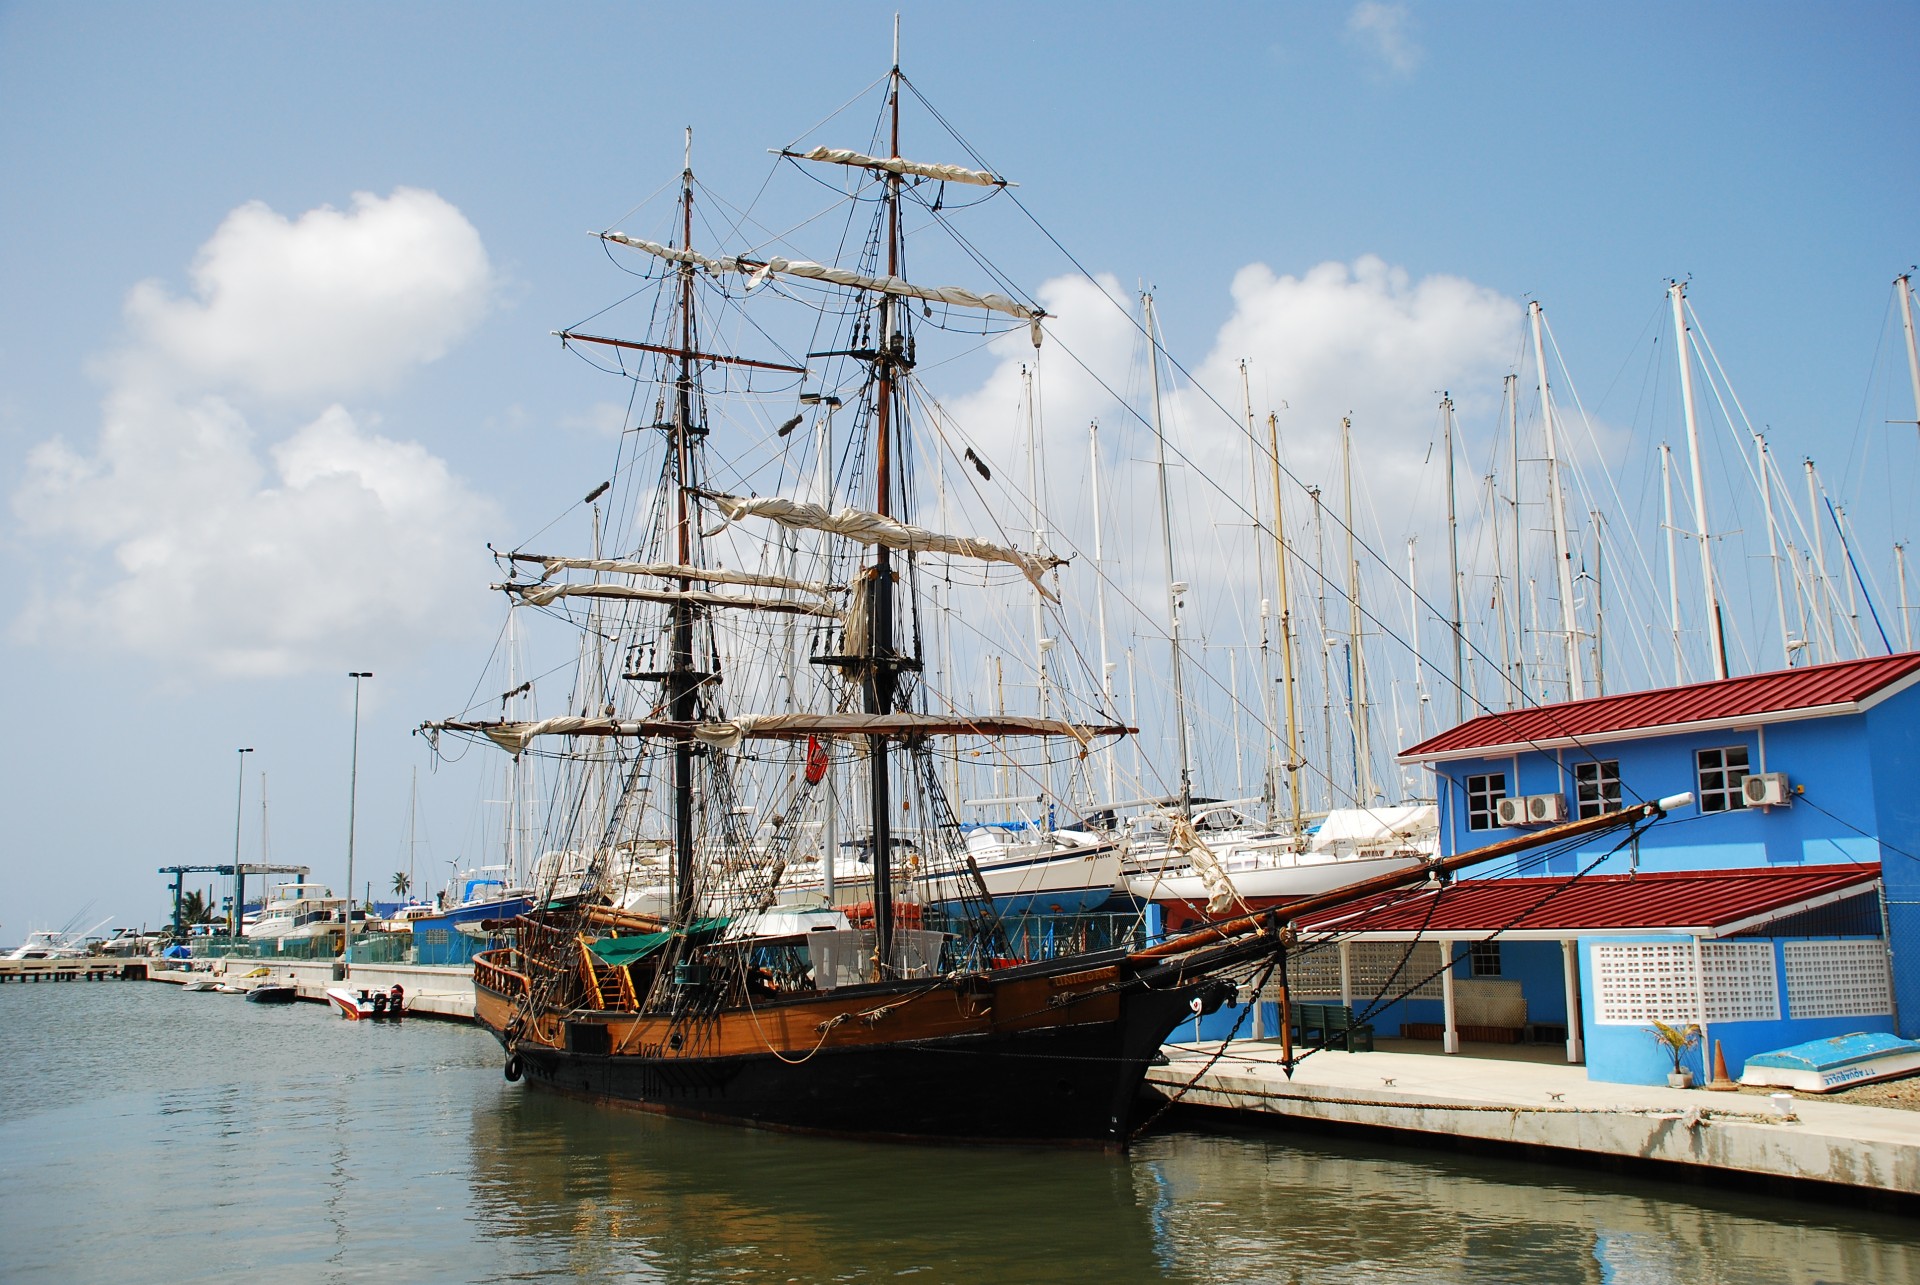 pirates of caribbean brig ship free photo